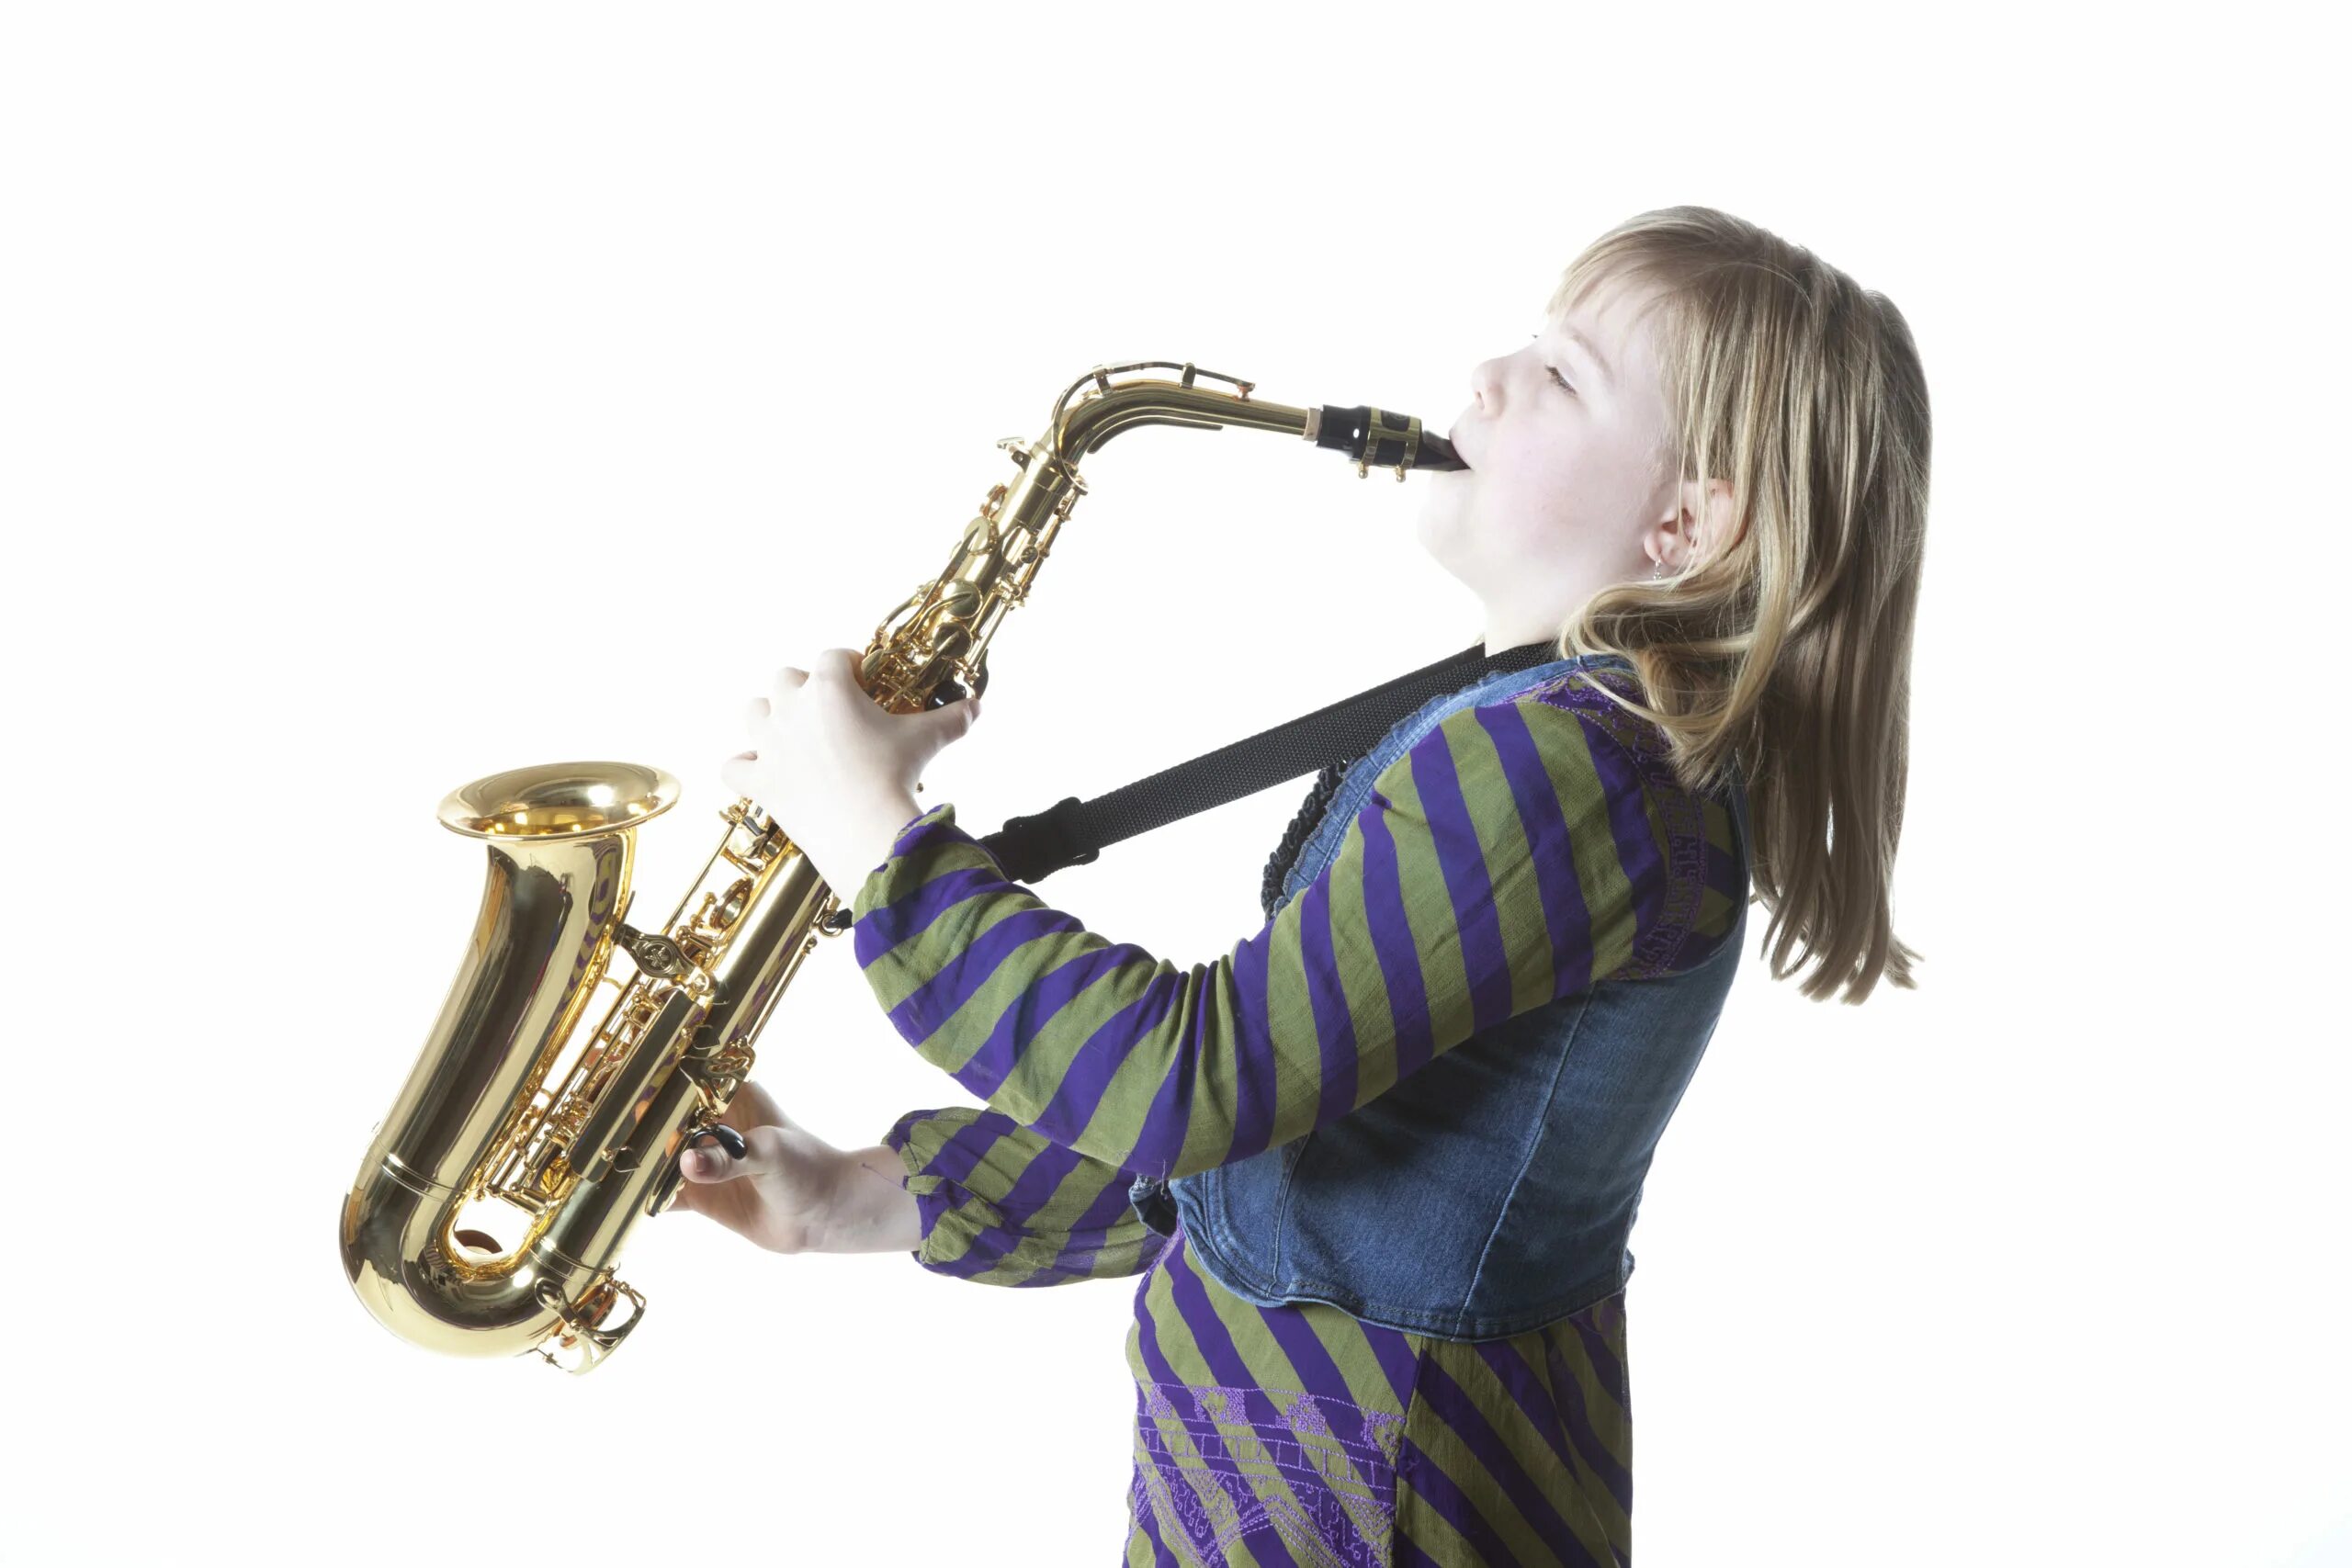 Человек с саксофоном. Ребенок играет на саксофоне фото. Девушка на саксофоне в студии